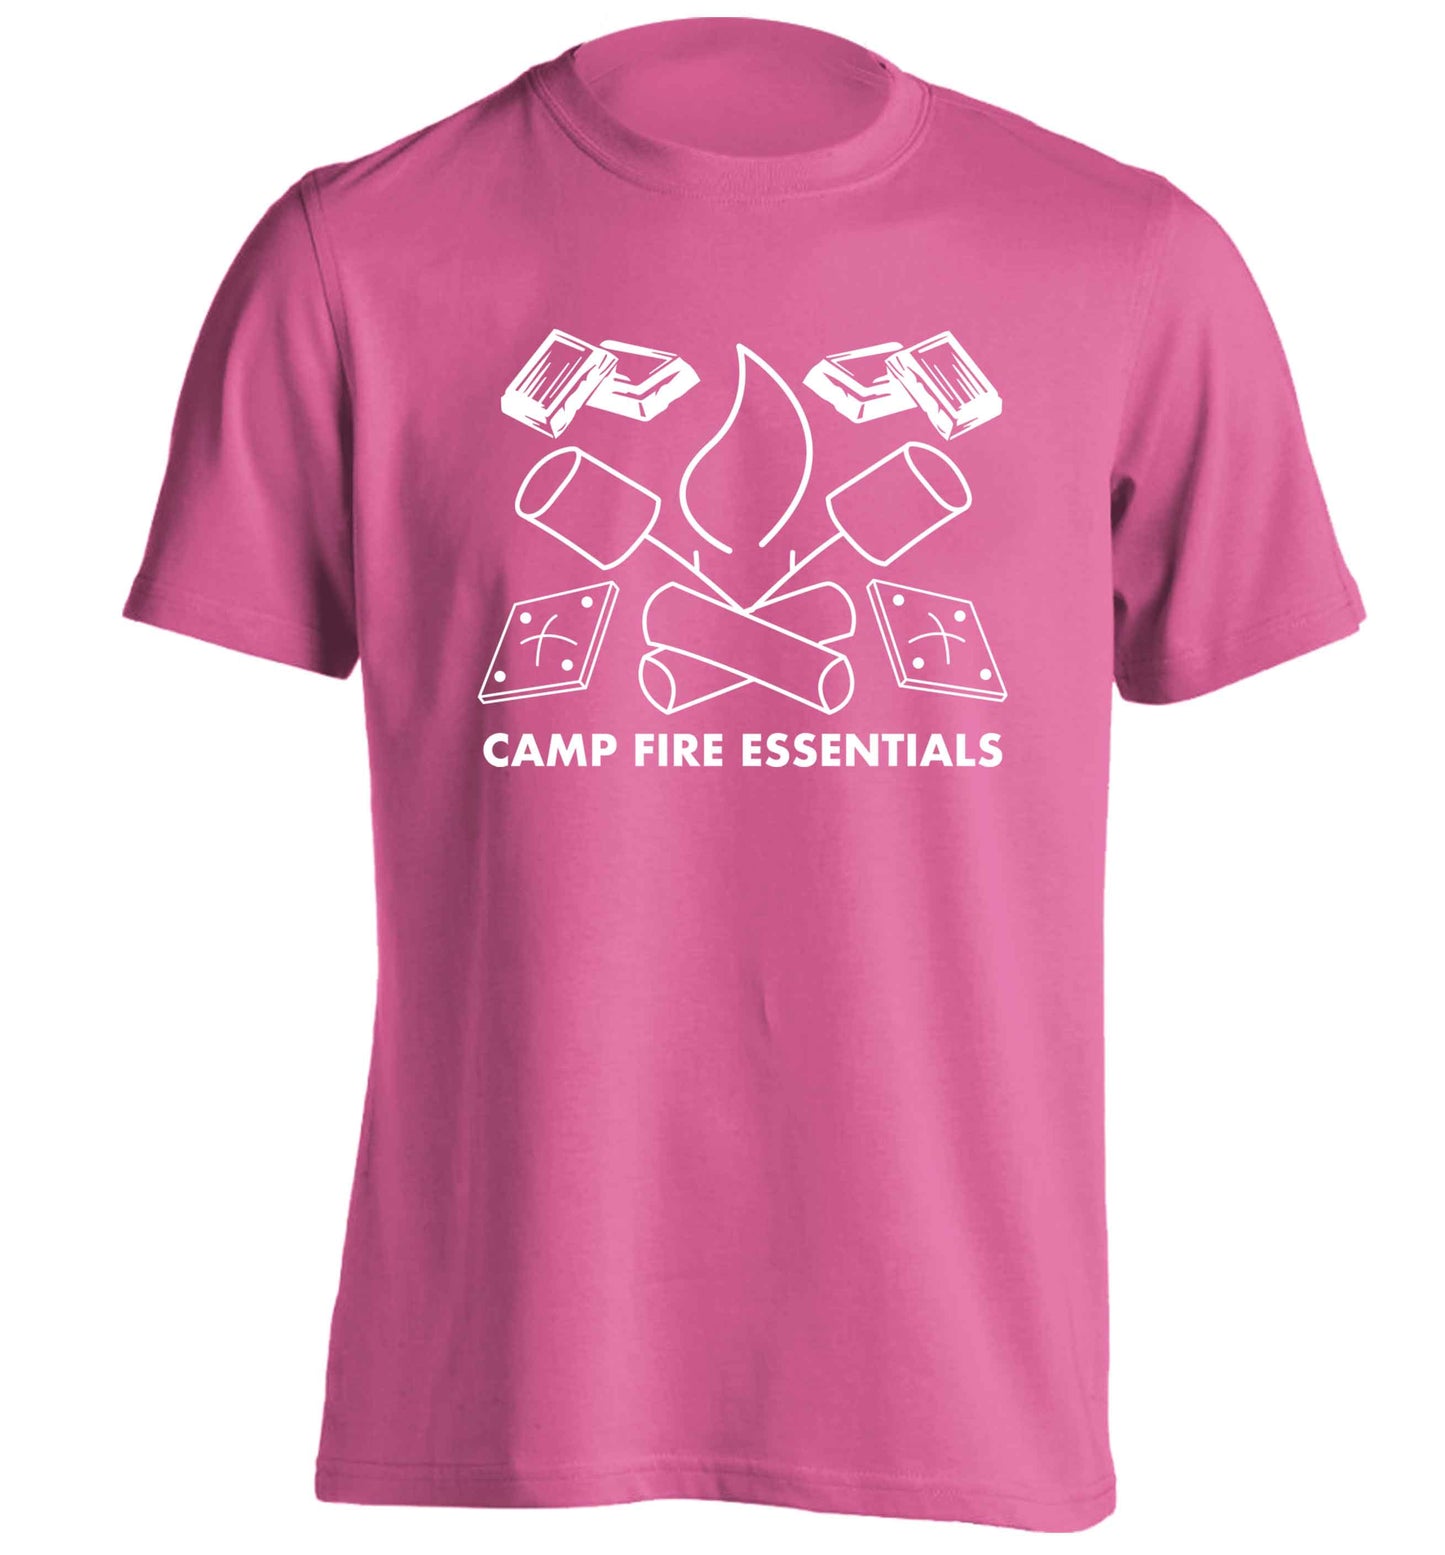 Campfire essentials adults unisex pink Tshirt 2XL